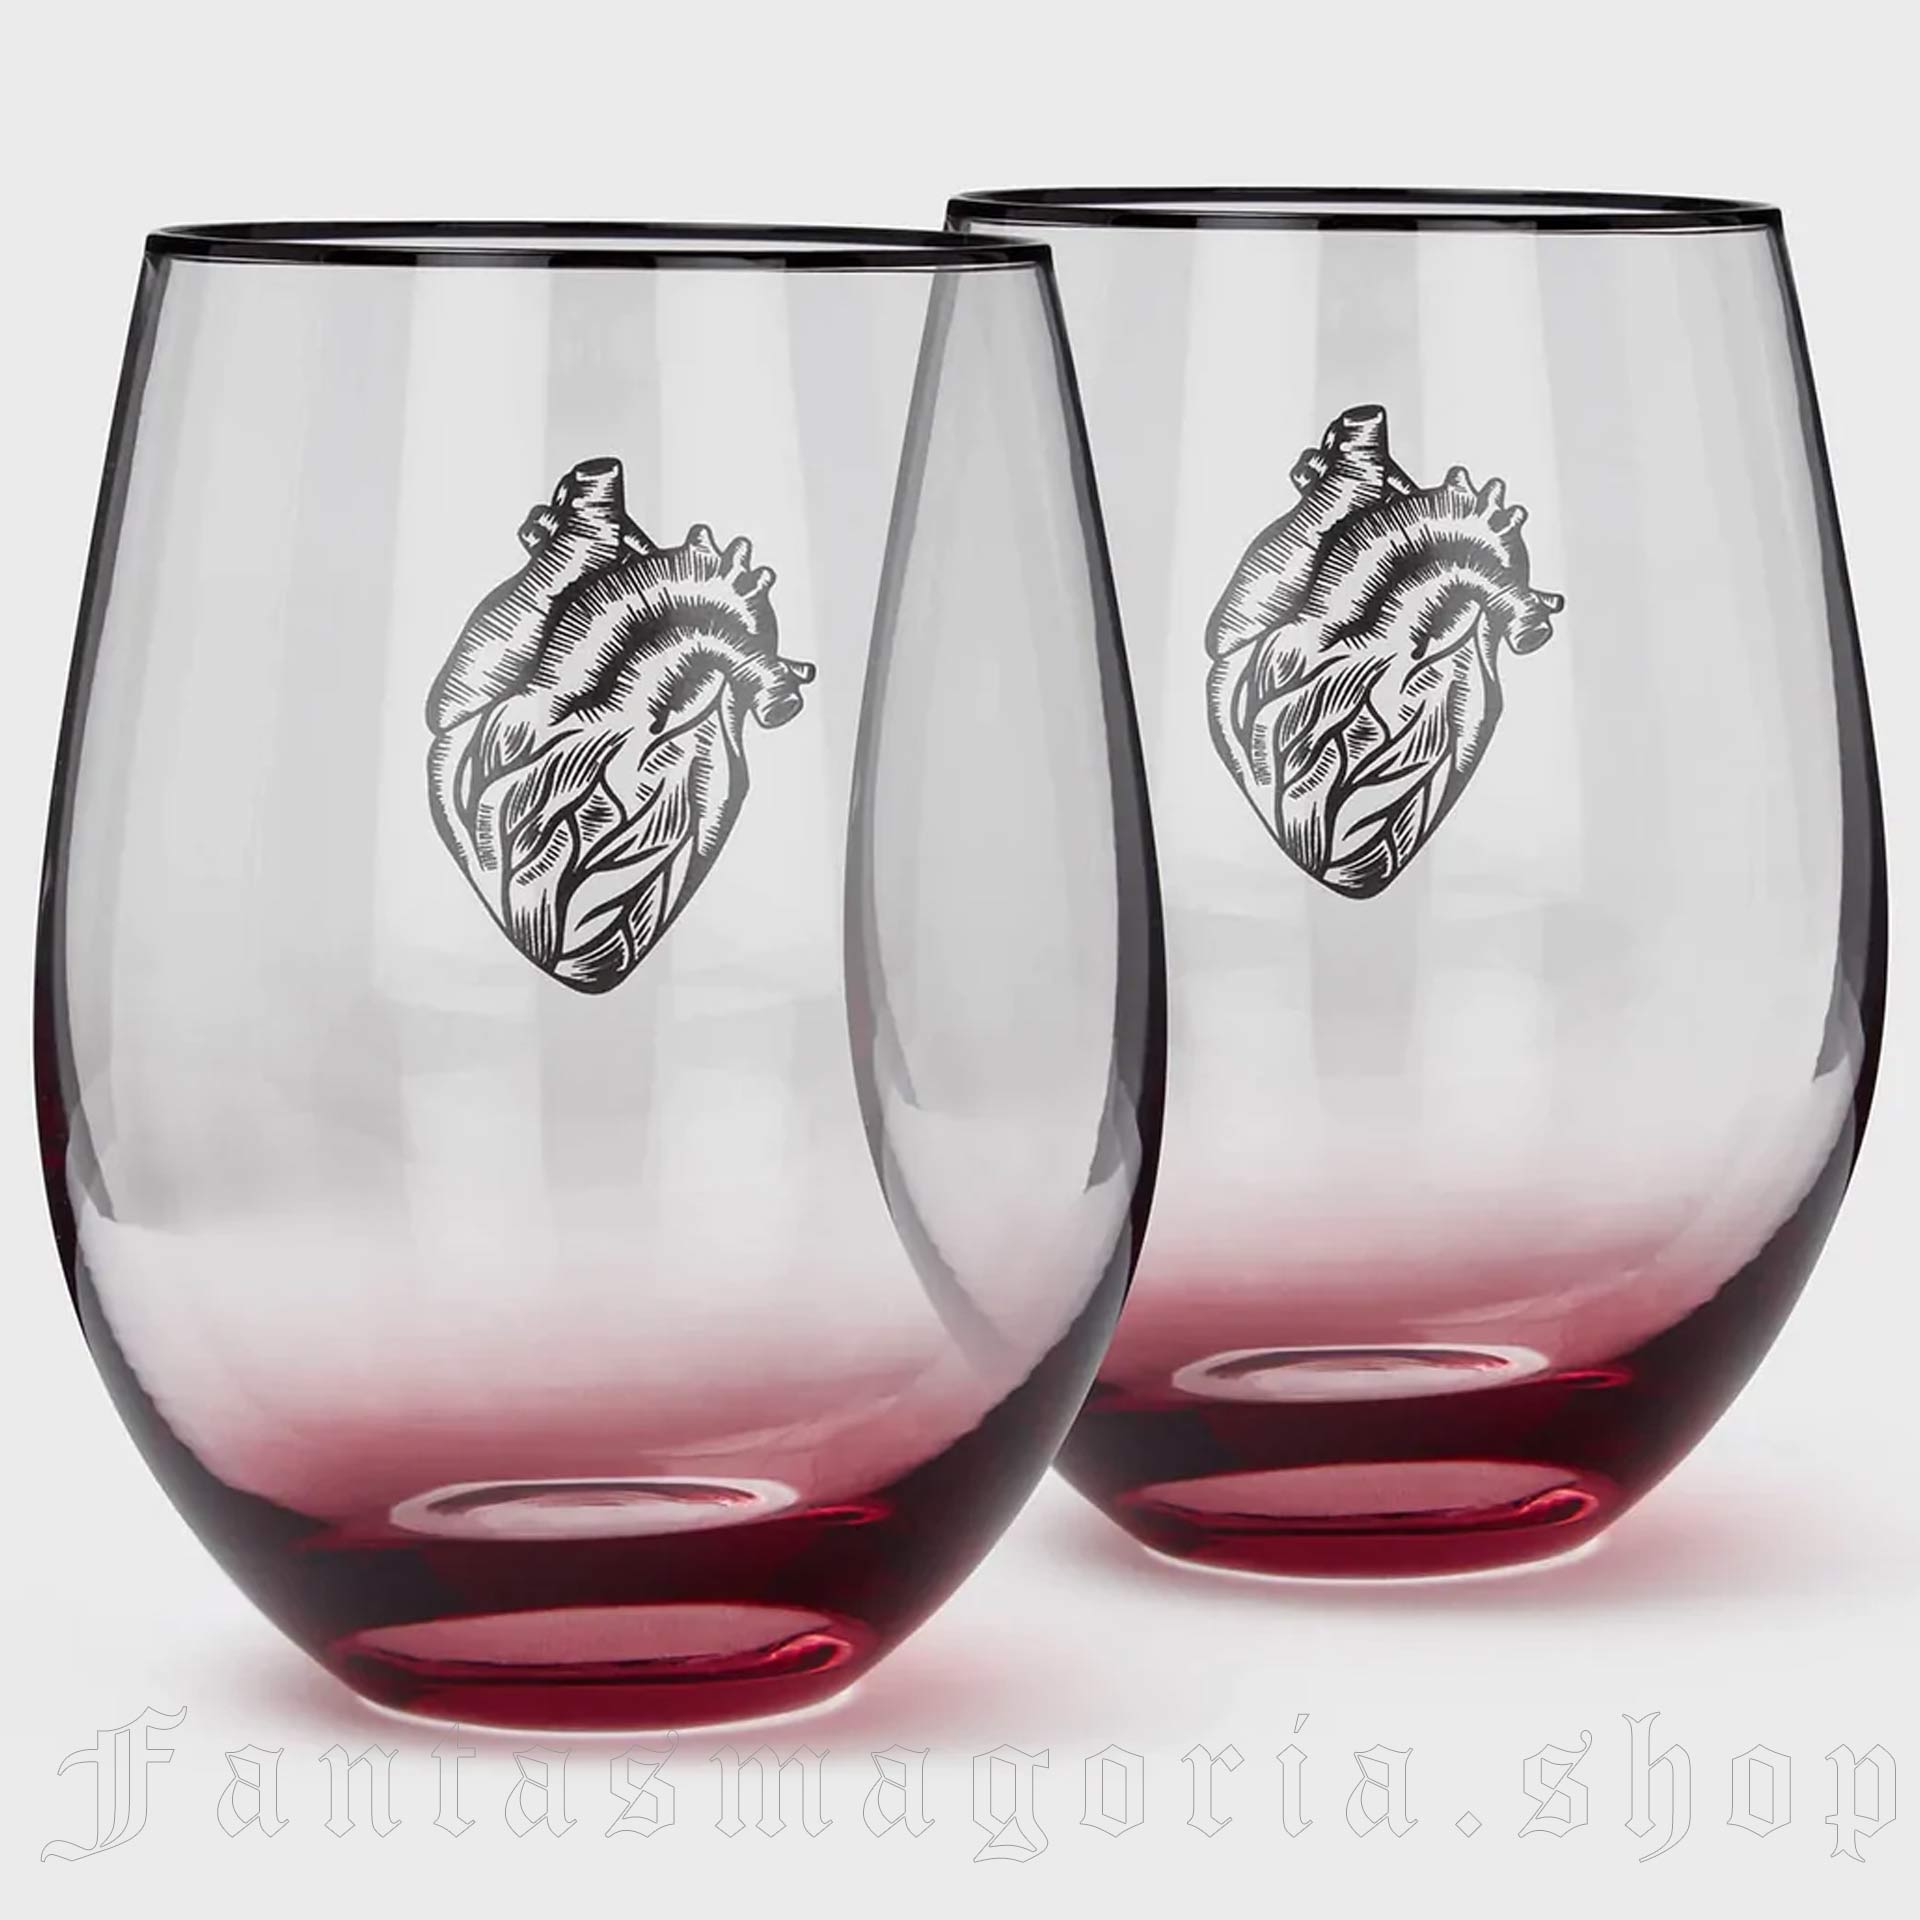 Ana-Tomic Heart Stemless Wine Glass Set